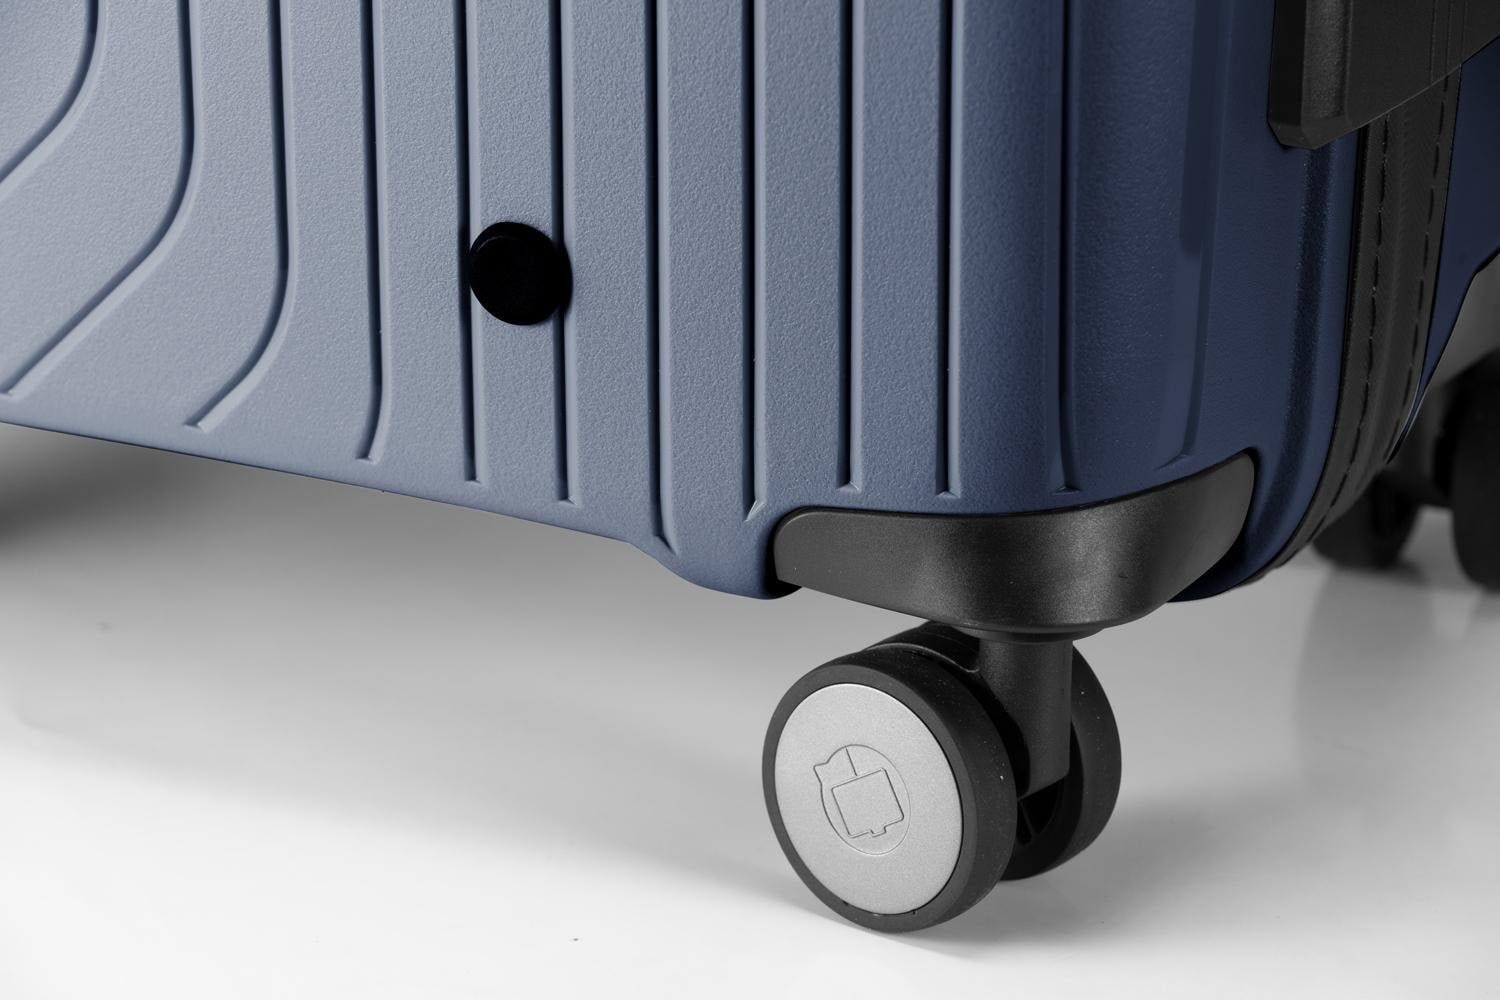 Hauptstadtkoffer Hartschalen-Trolley »TXL, 66 cm, dunkelblau«, 4 Rollen, Hartschalen-Koffer Koffer mittel groß Reisegepäck TSA Schloss